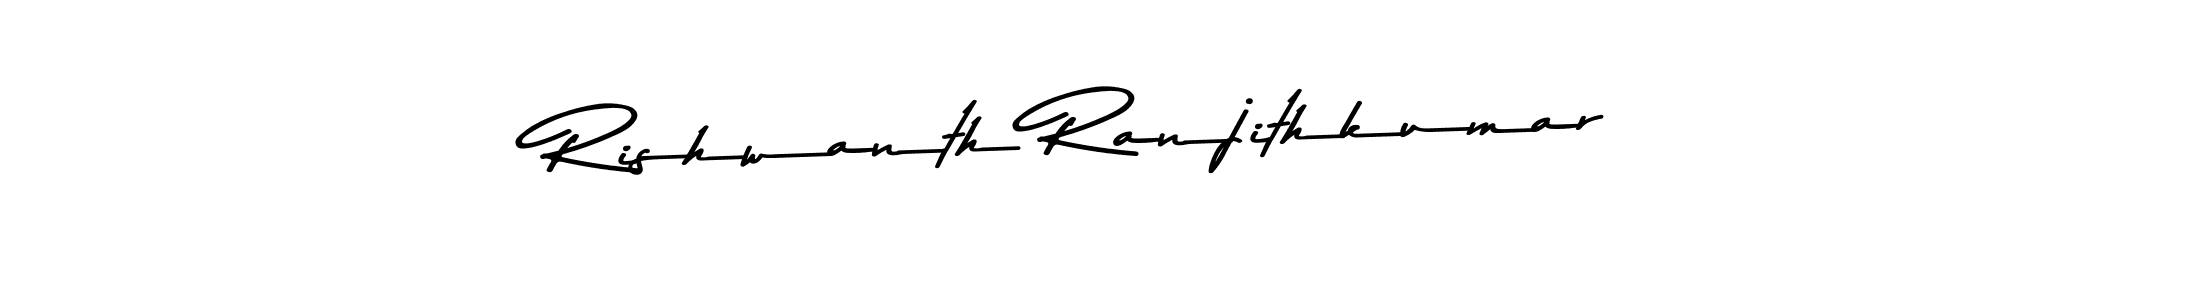 Rishwanth Ranjithkumar stylish signature style. Best Handwritten Sign (Asem Kandis PERSONAL USE) for my name. Handwritten Signature Collection Ideas for my name Rishwanth Ranjithkumar. Rishwanth Ranjithkumar signature style 9 images and pictures png